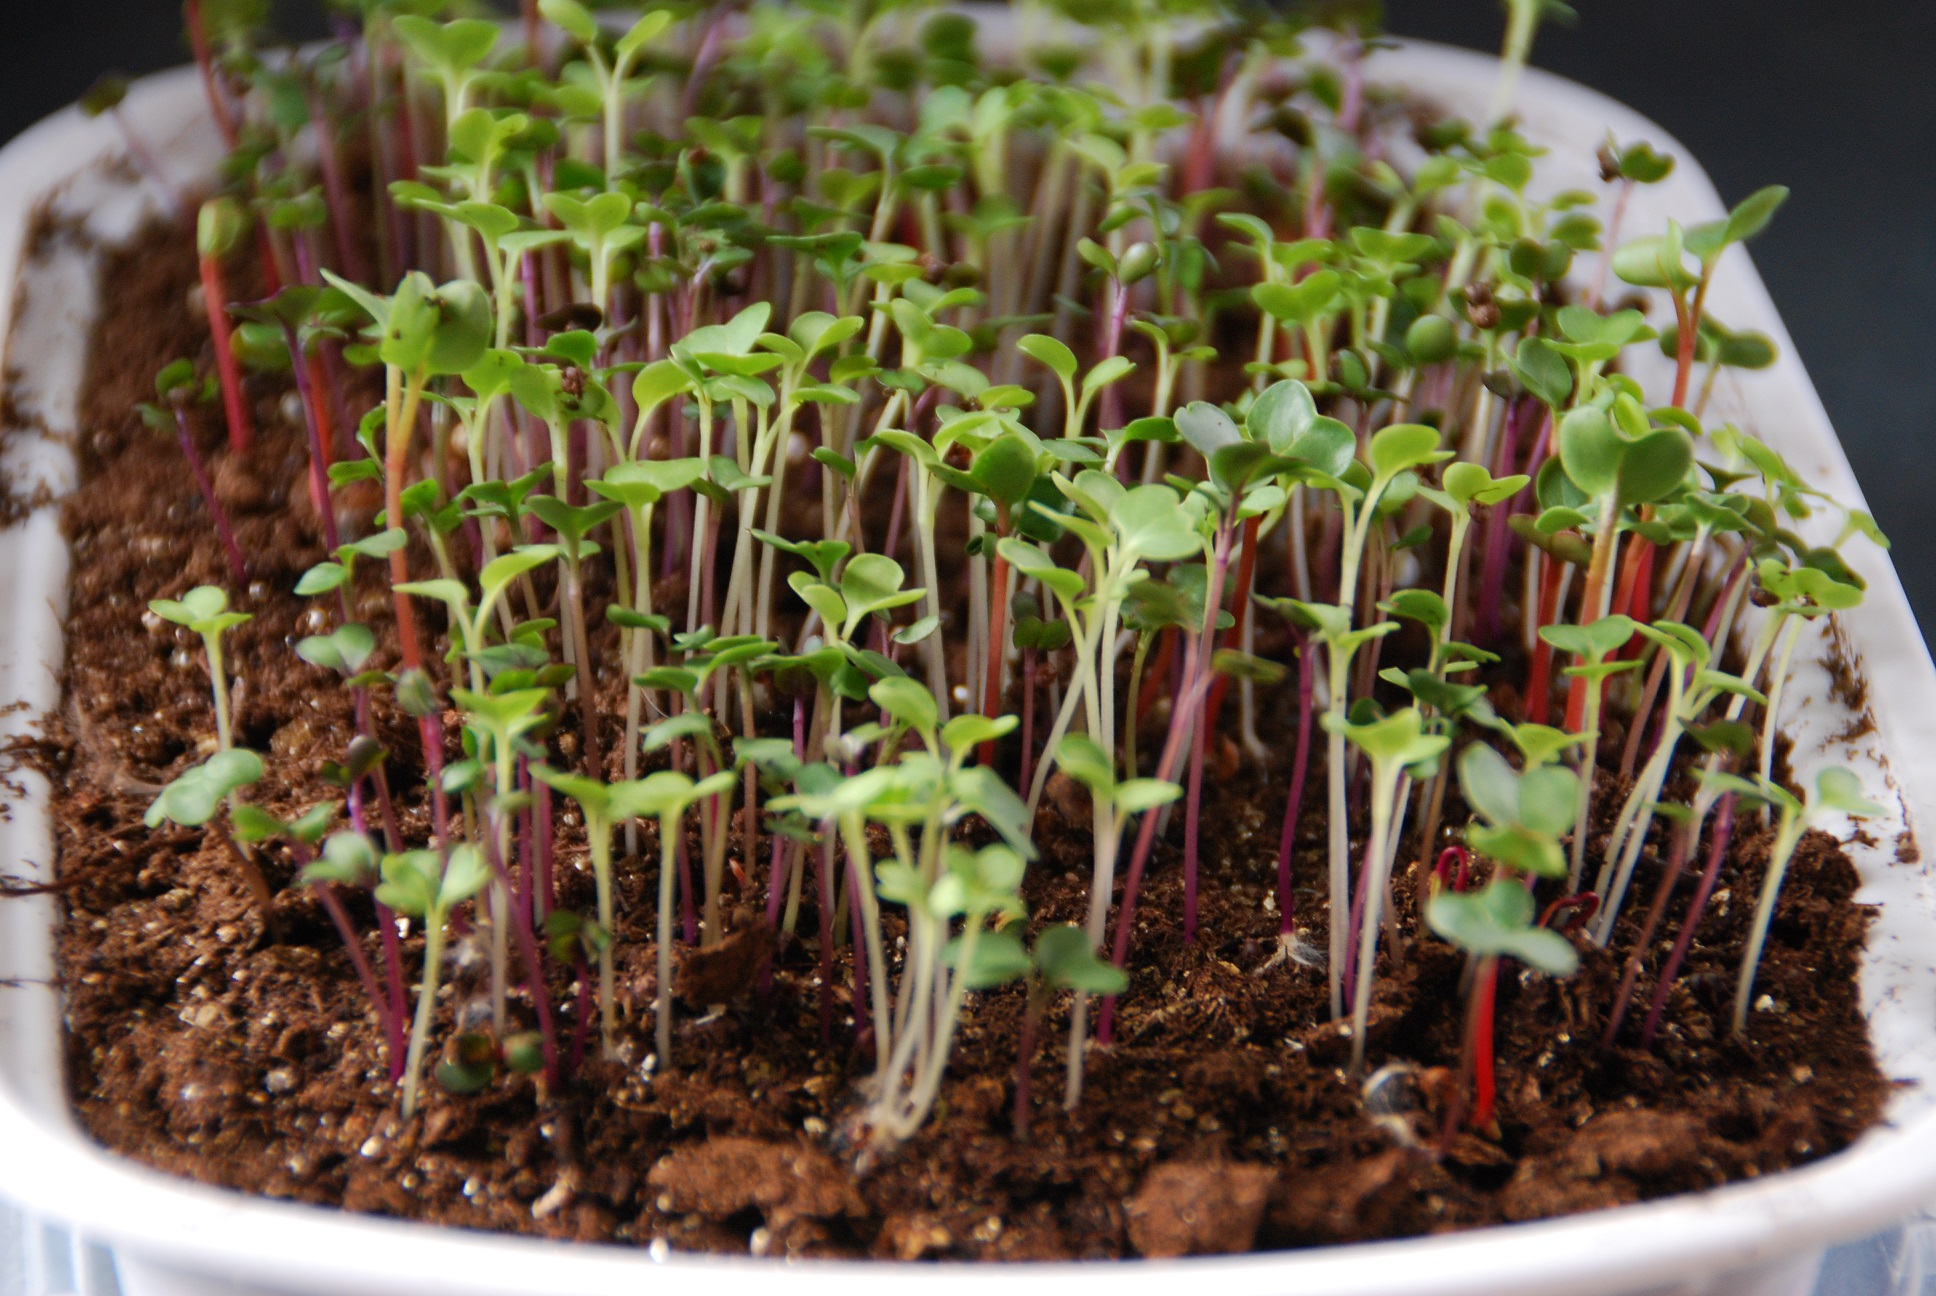 Micro-greens growing indoors